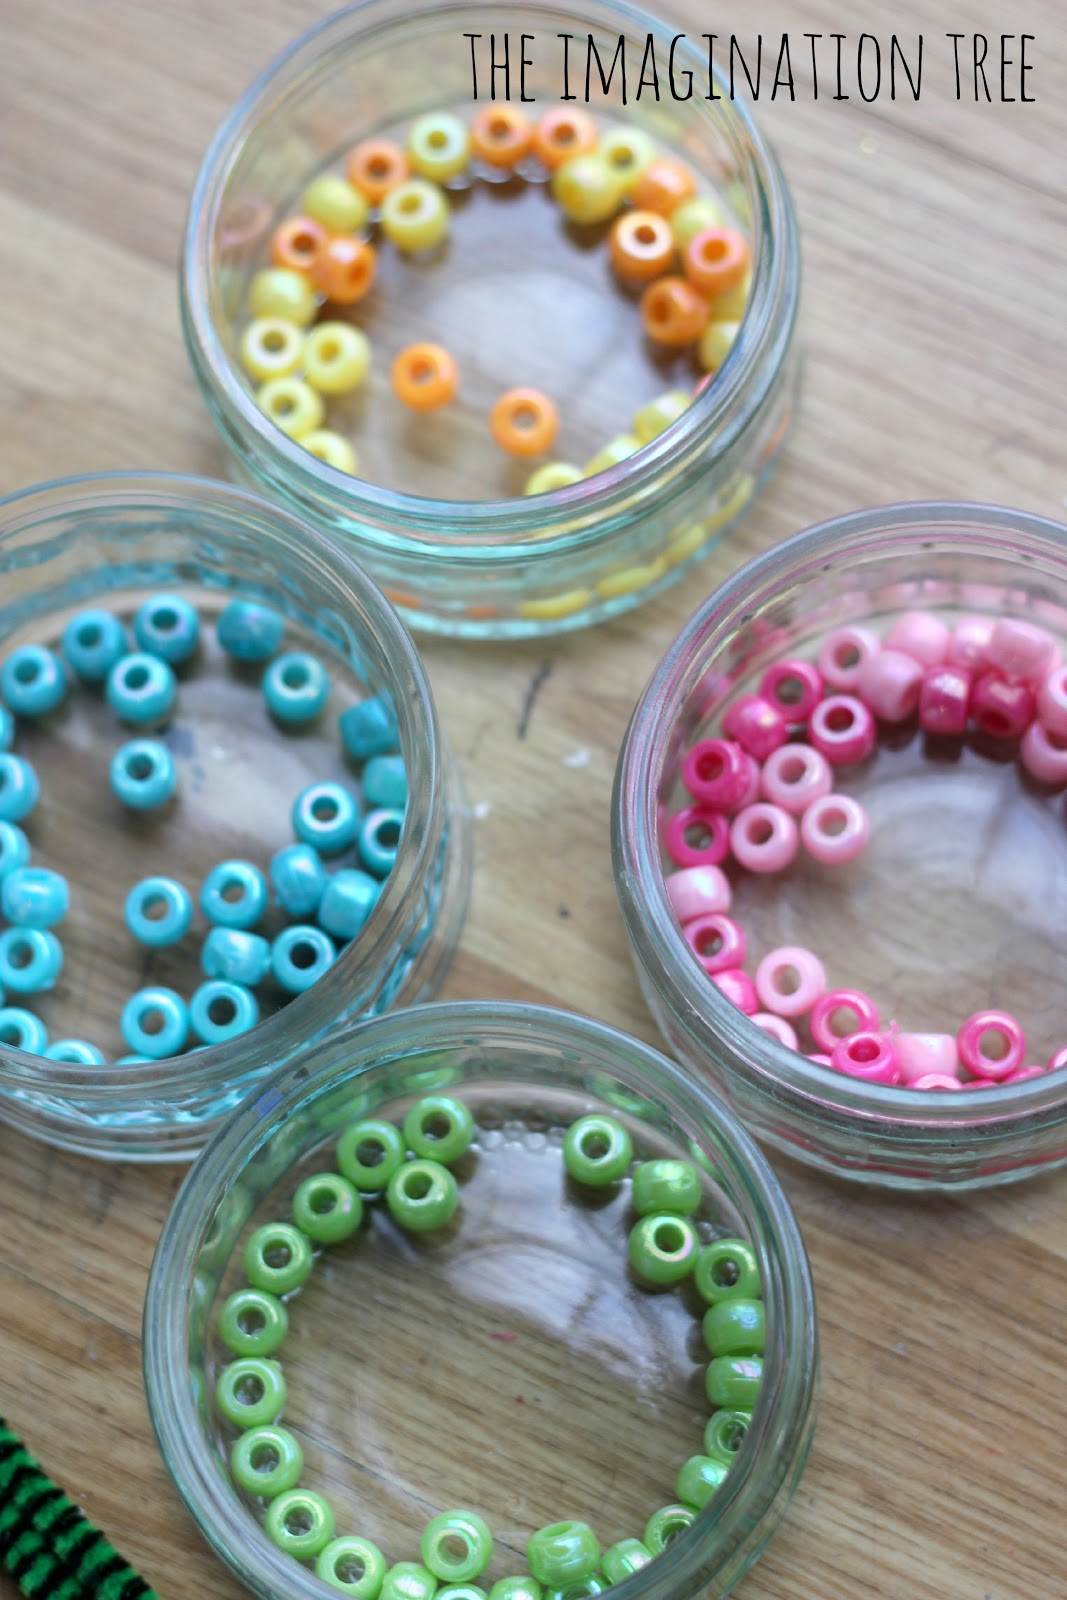 Easy Beaded Bracelets Kids Can Make - Rhythms of Play